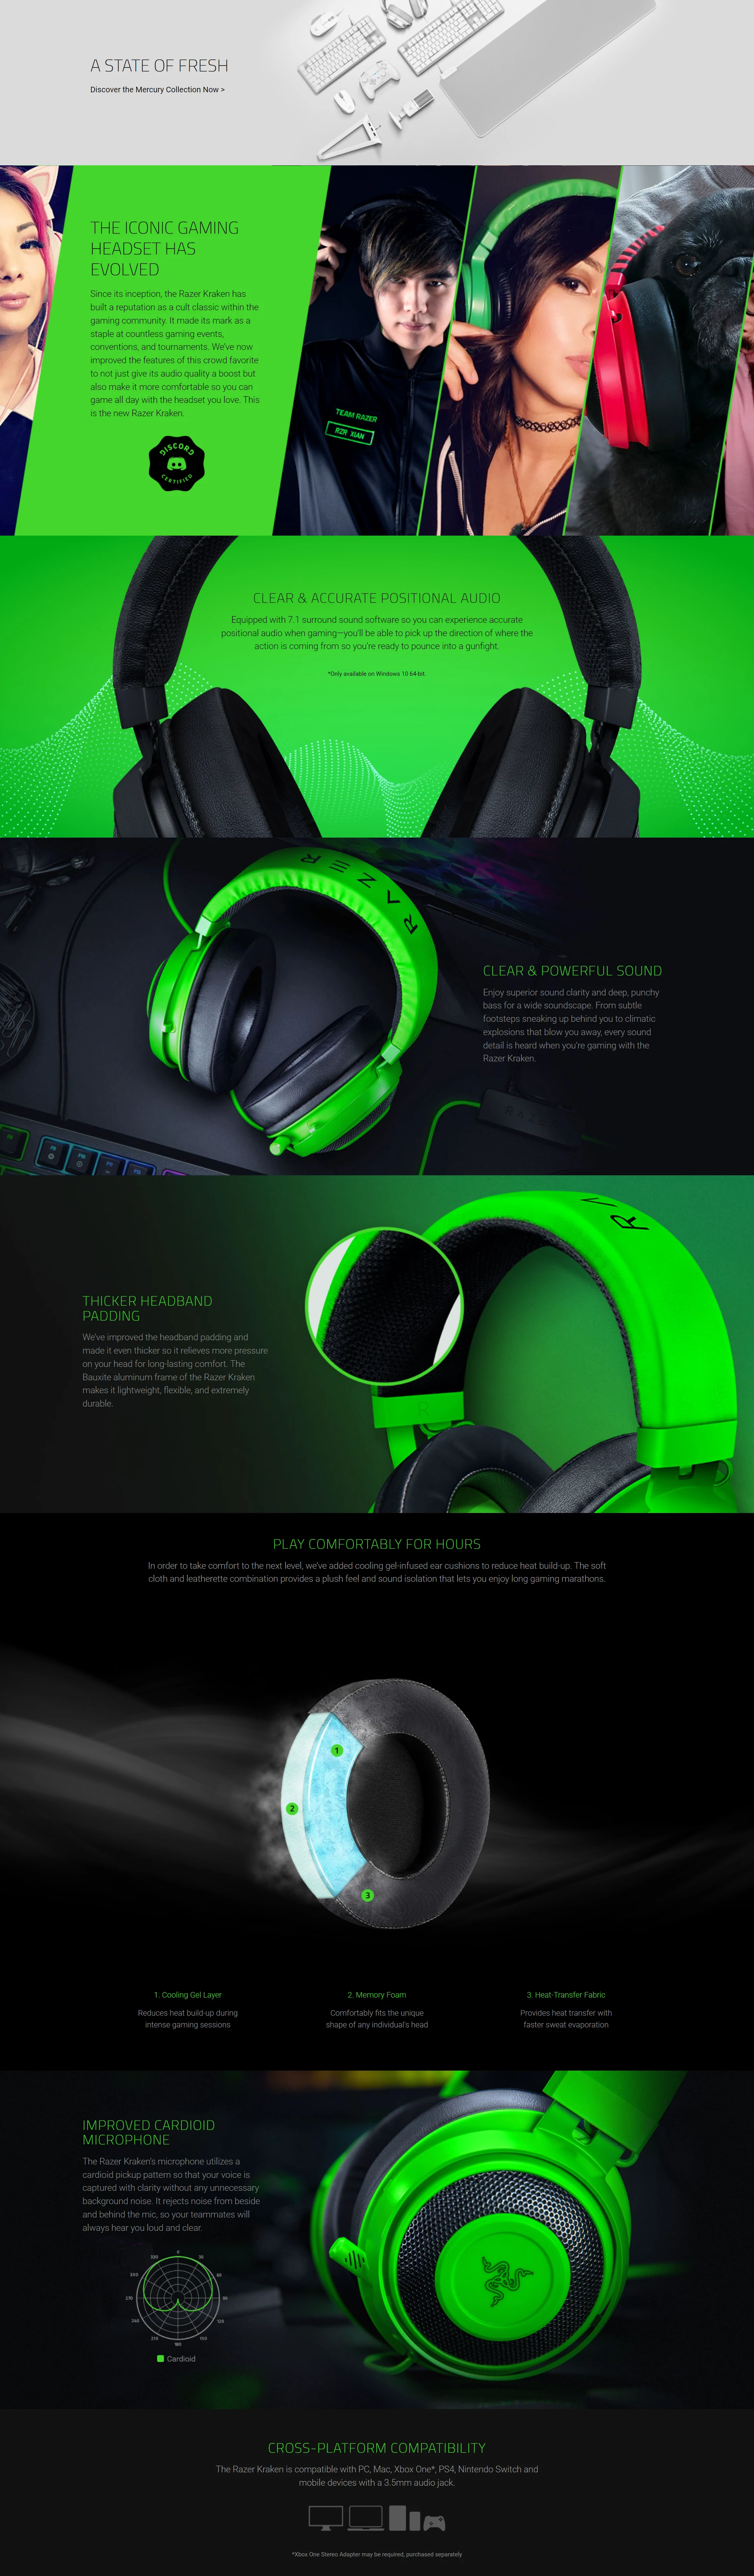 Overview - Razer Kraken Multi-Platform Wired Gaming Headset - Black